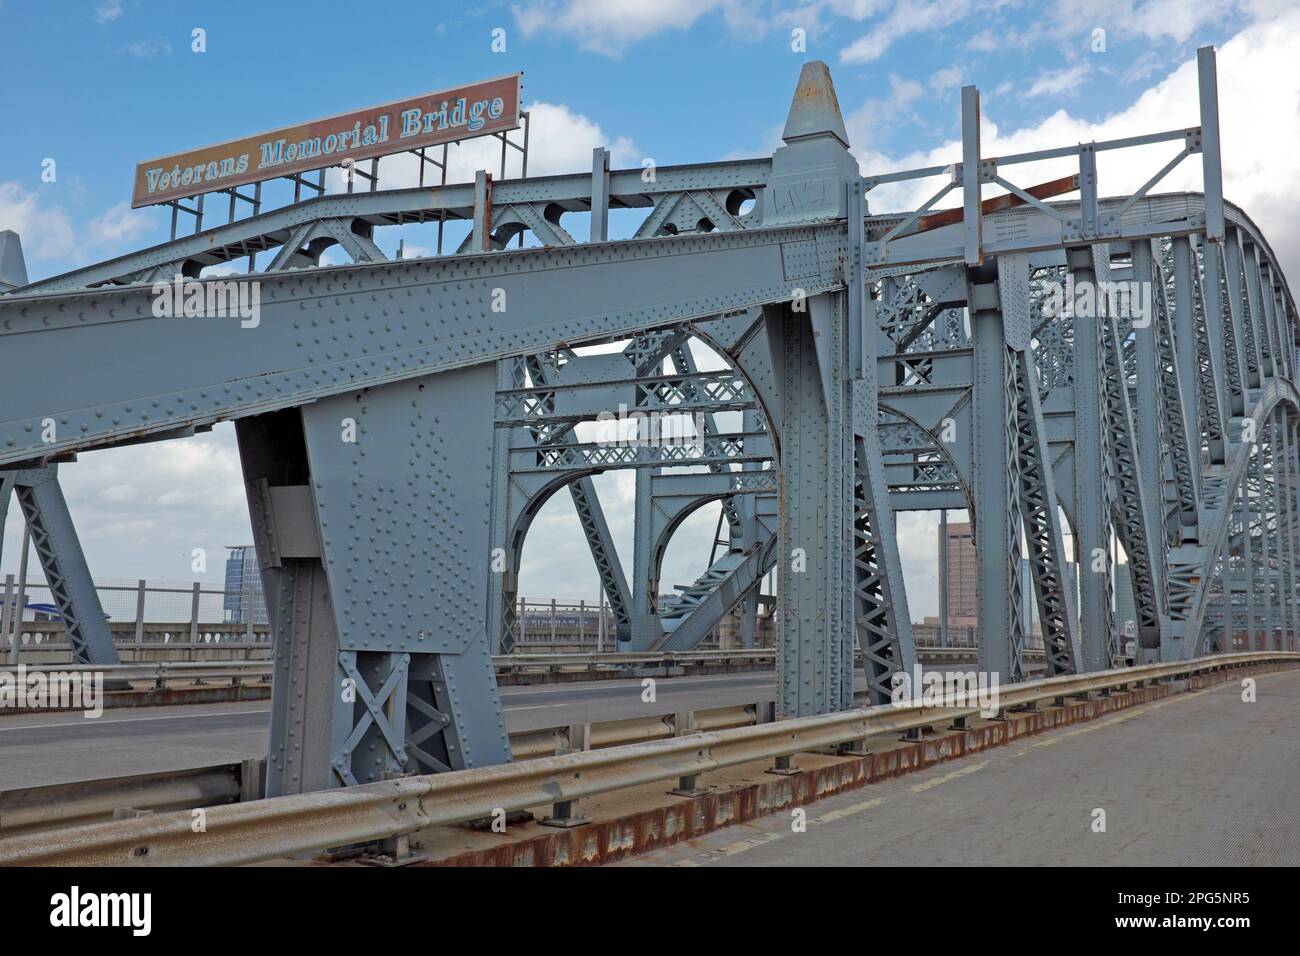 The Veterans Memorial Bridge, a high level compression arch suspended deck bridge in Cleveland, Ohio, USA, also known as the Detroit-Superior Bridge. Stock Photo